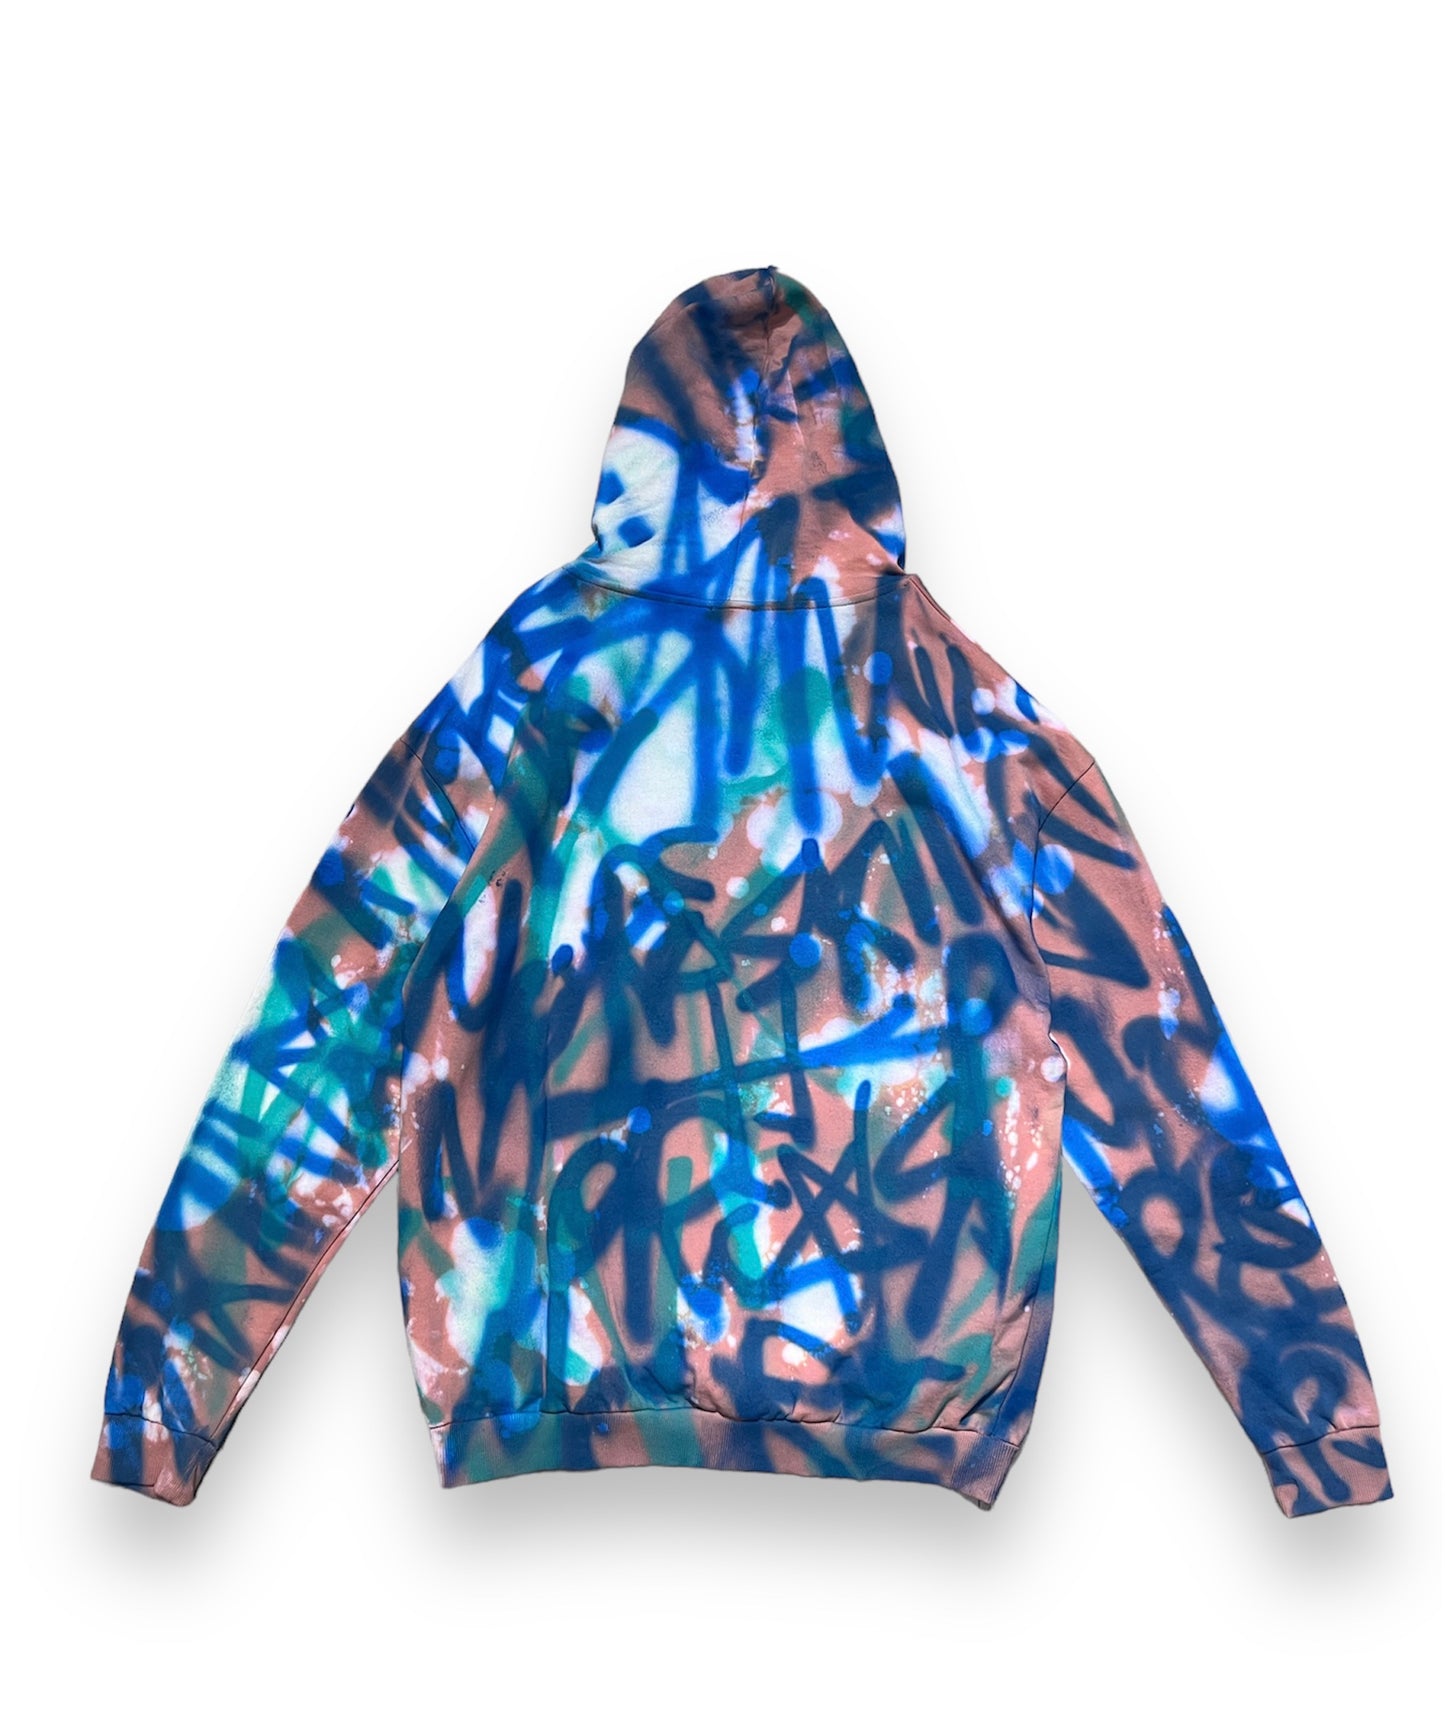 graffiti hoodie blue & more